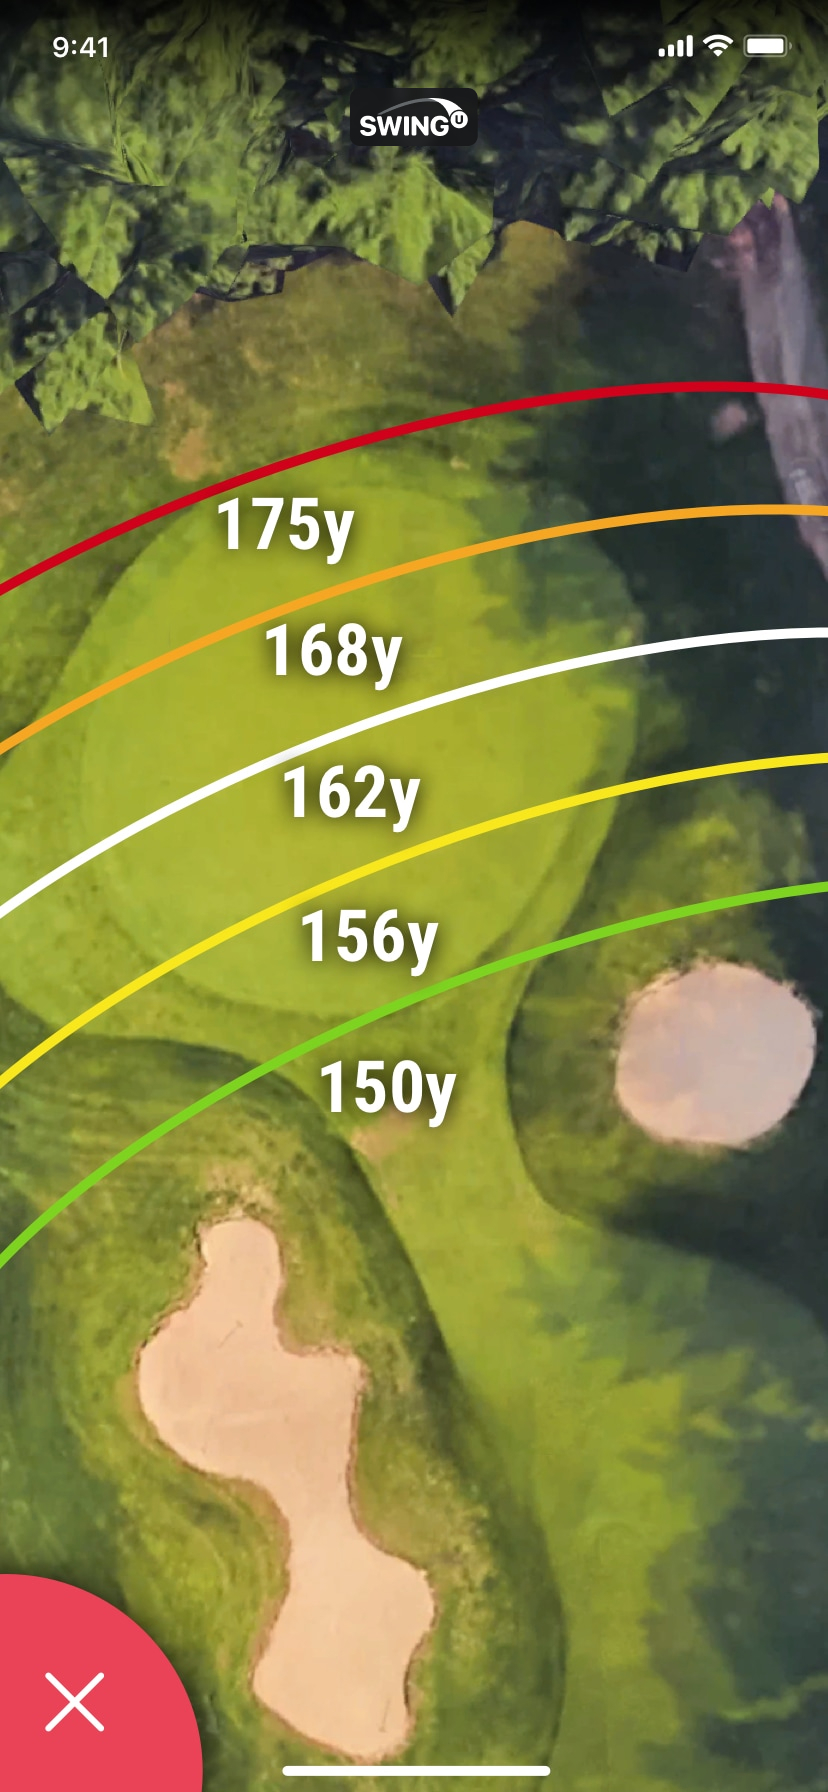 SwingU - Screenshot - SwingU Golf GPS Zoom-In Green Distances